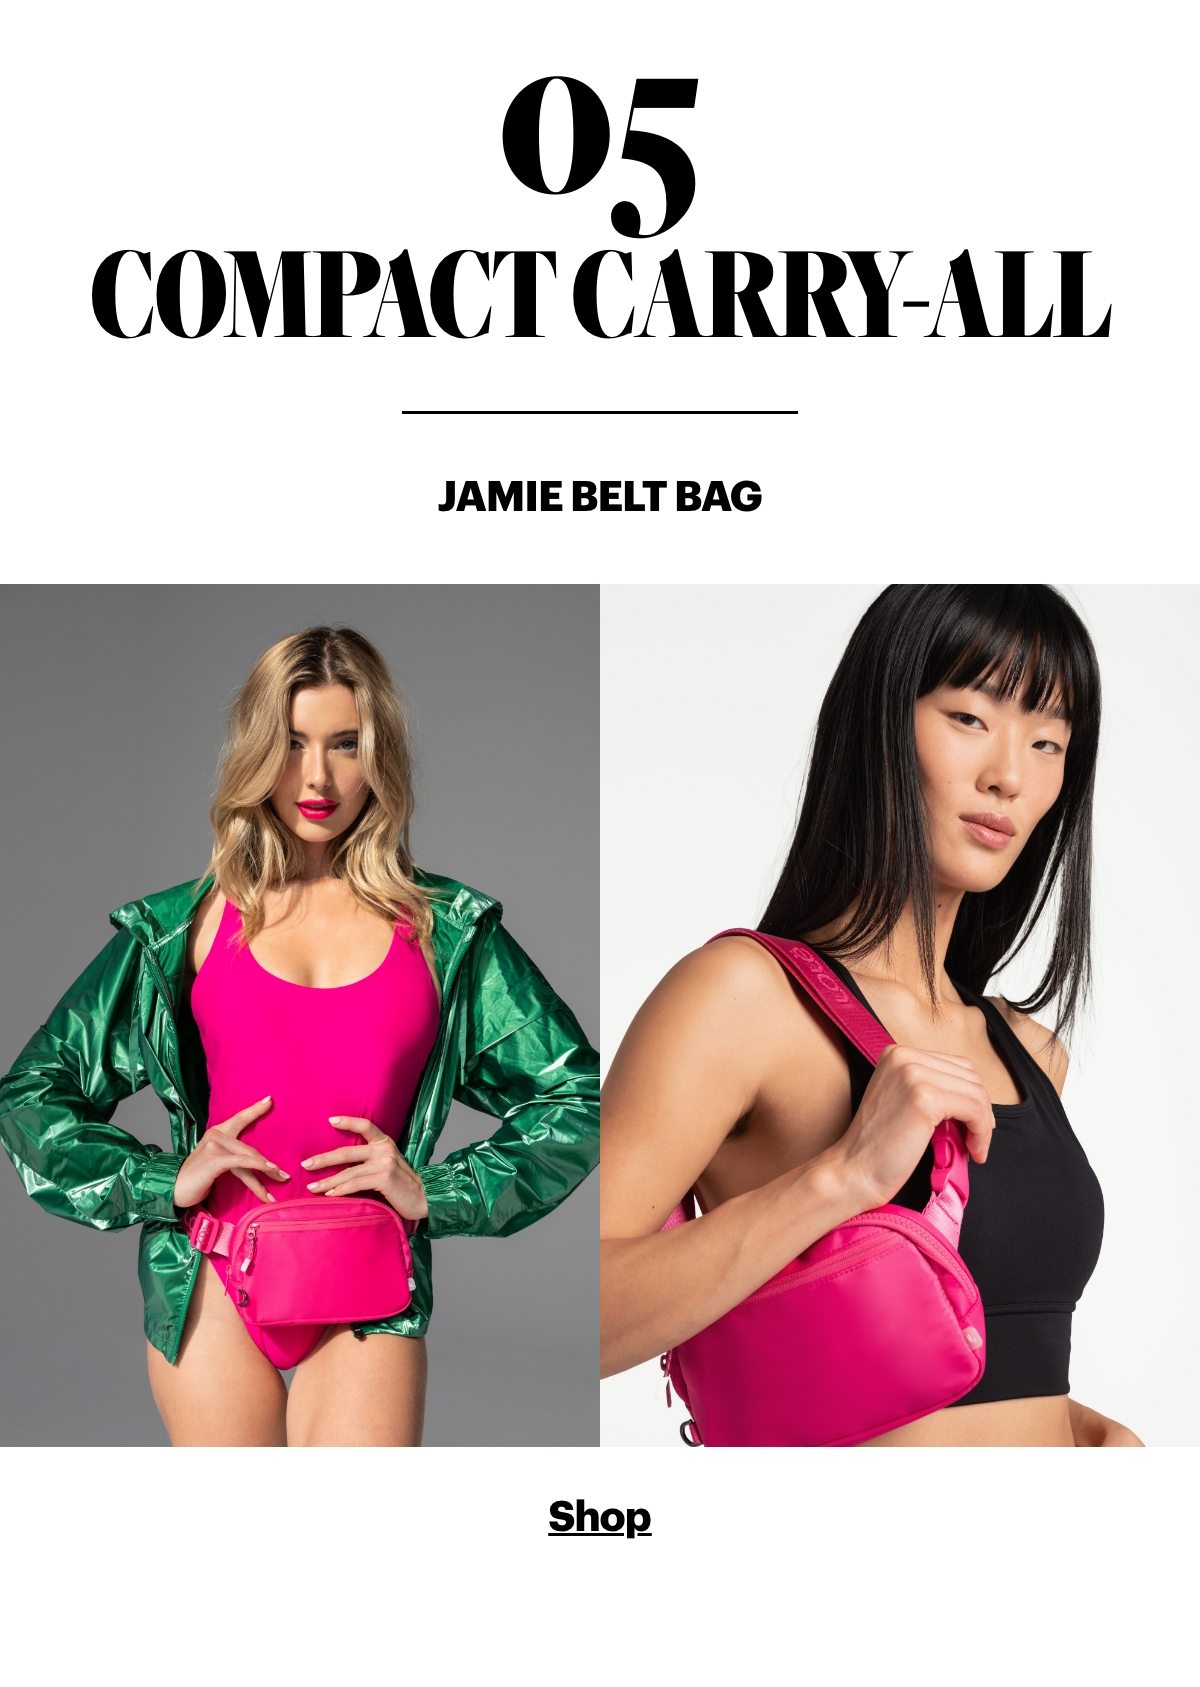 Jamie Belt Bag